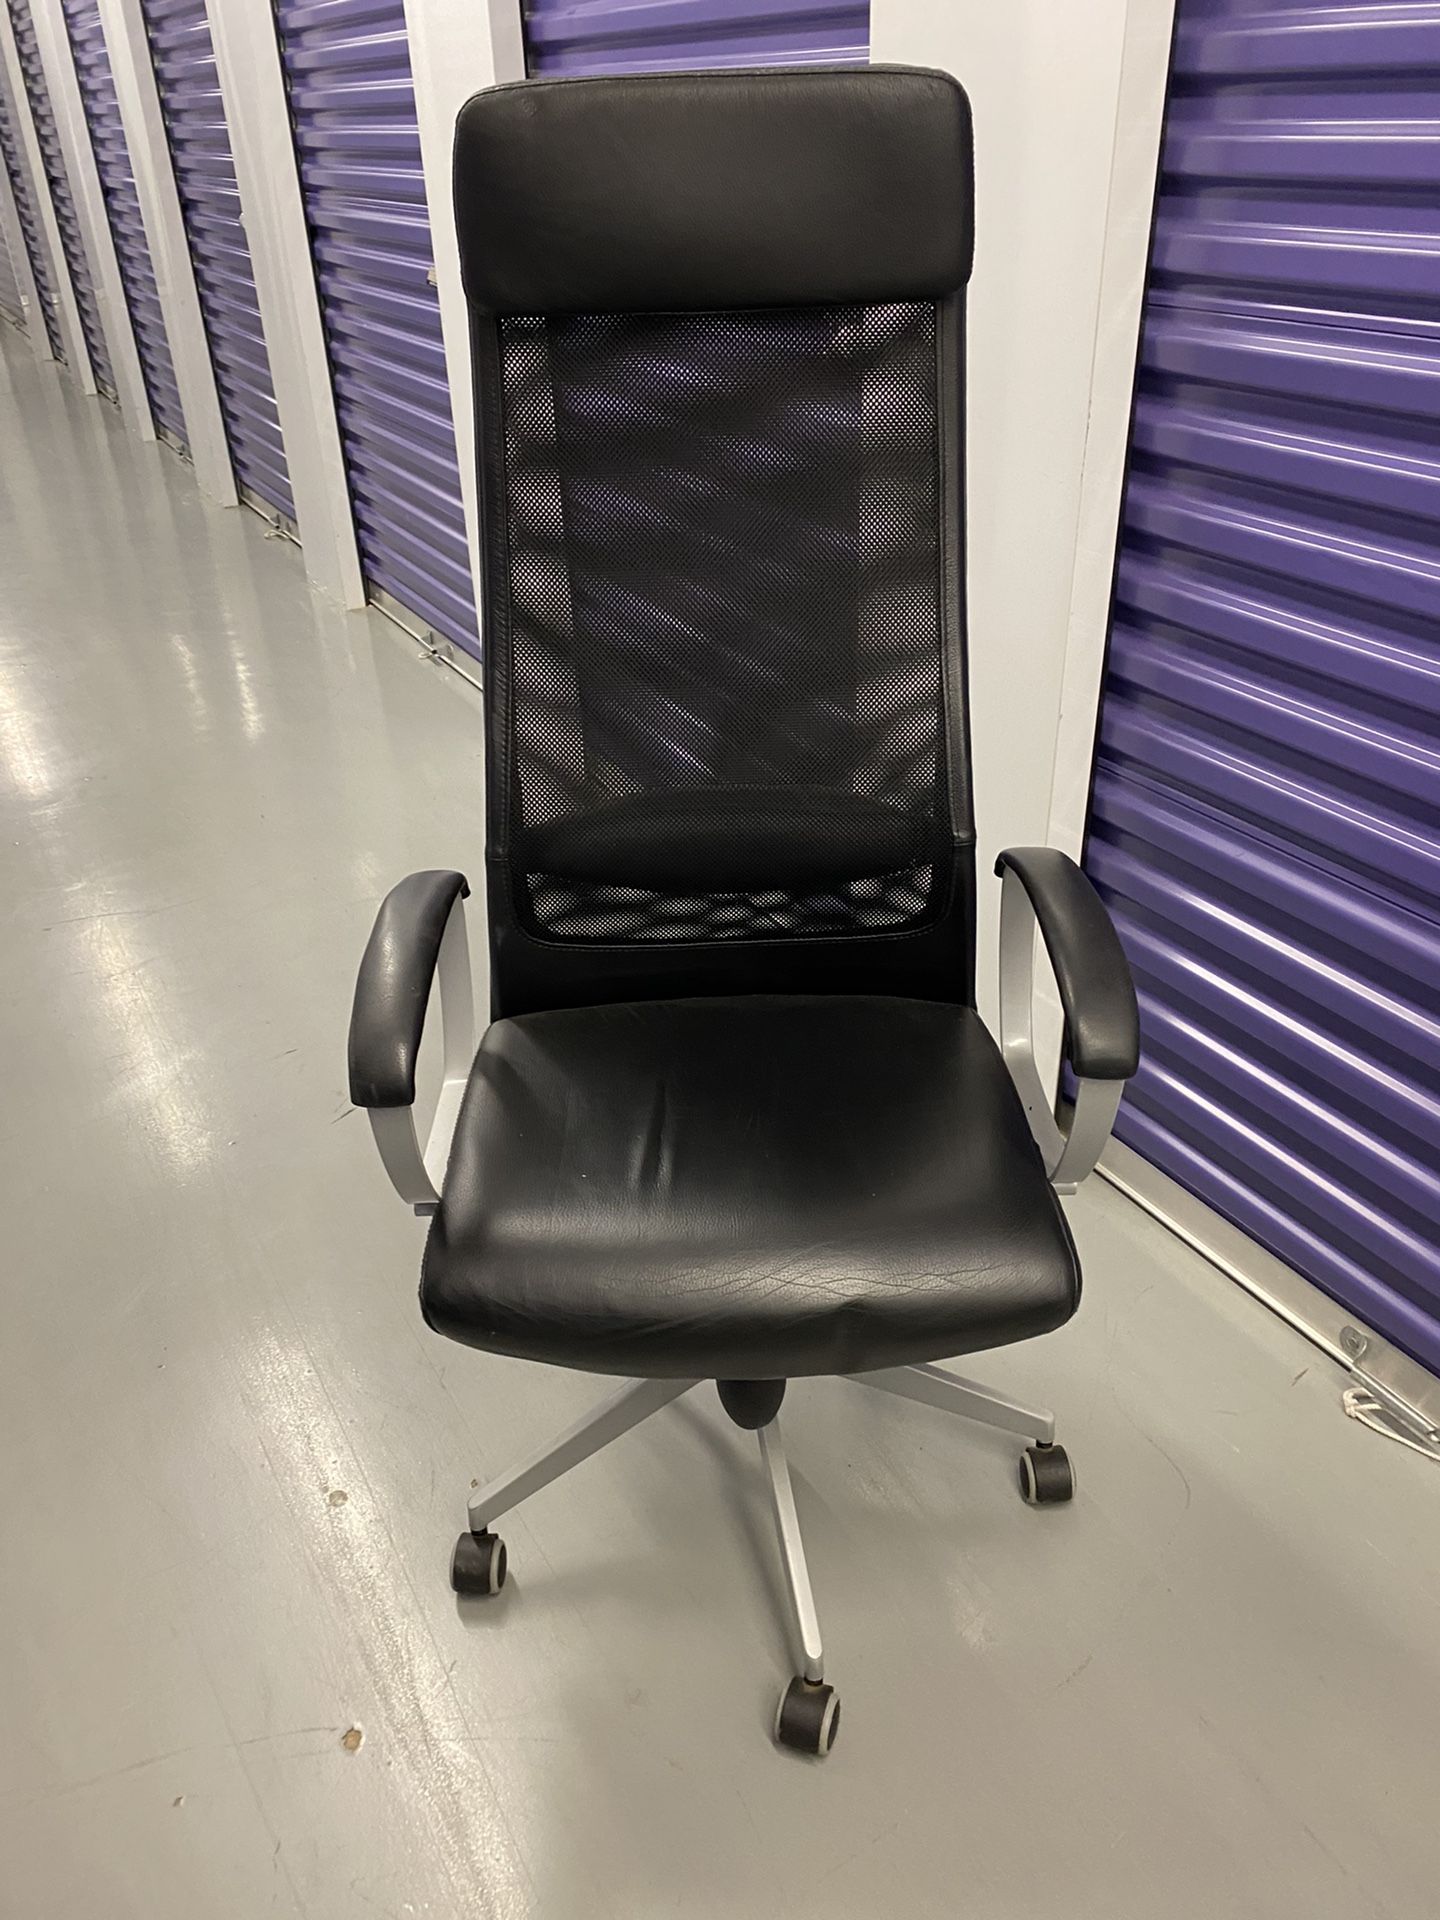 2 IKEA office chairs 